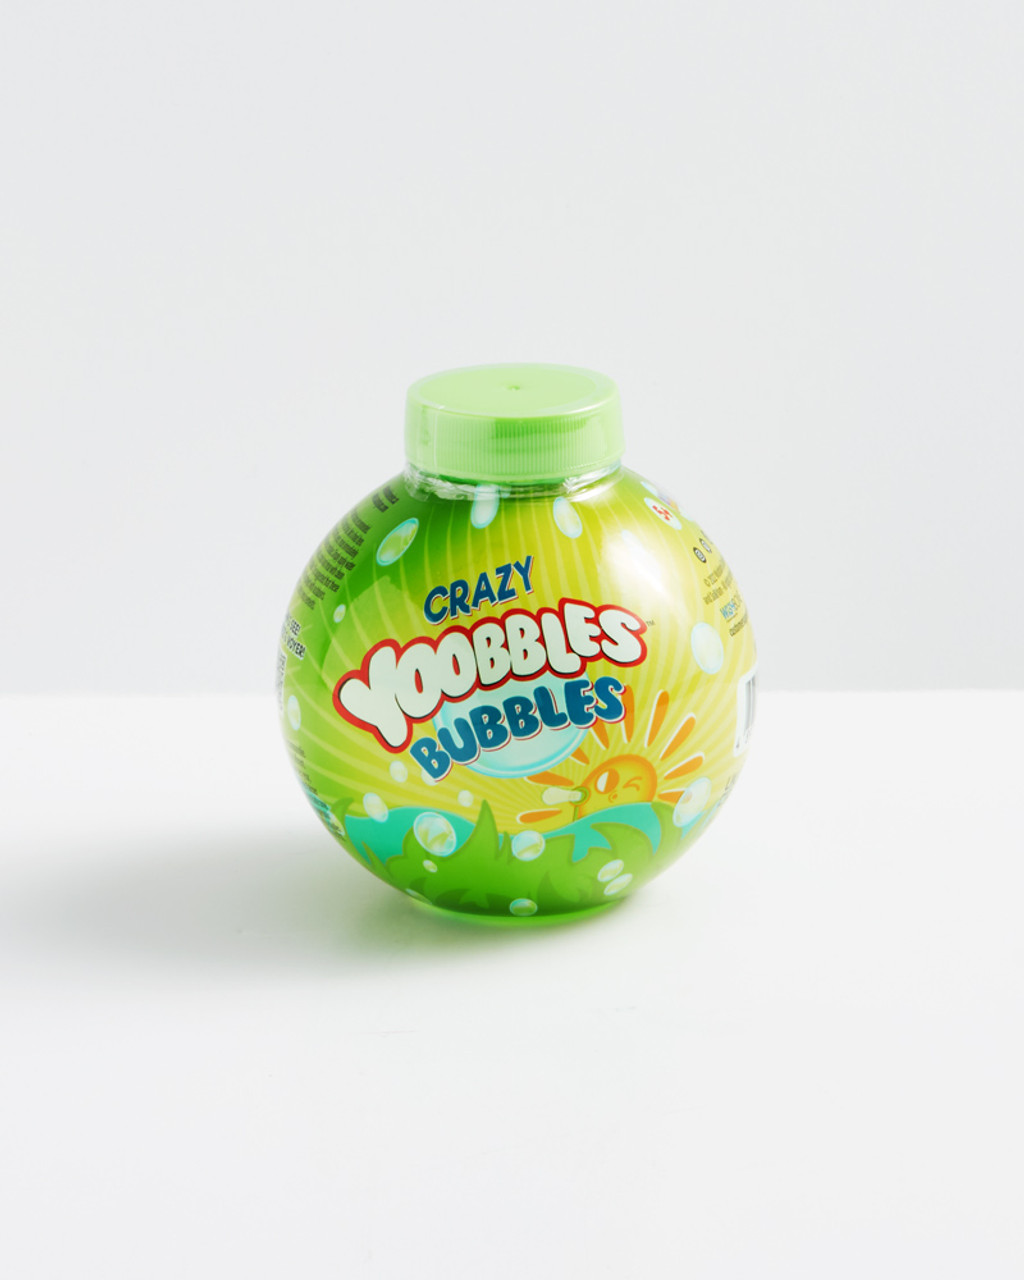 Yoobbles Bubbles 3.5 Oz Bottles